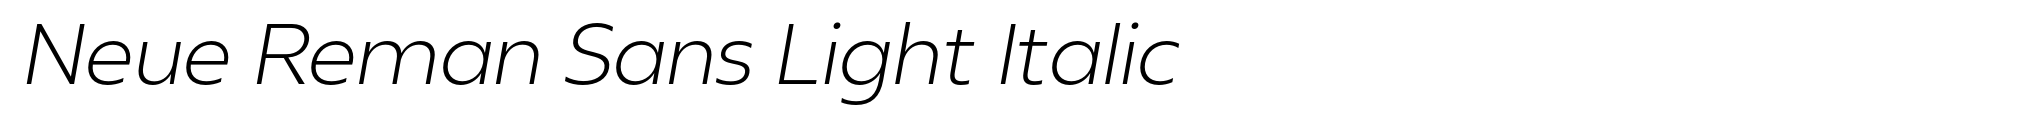 Neue Reman Sans Light Italic image